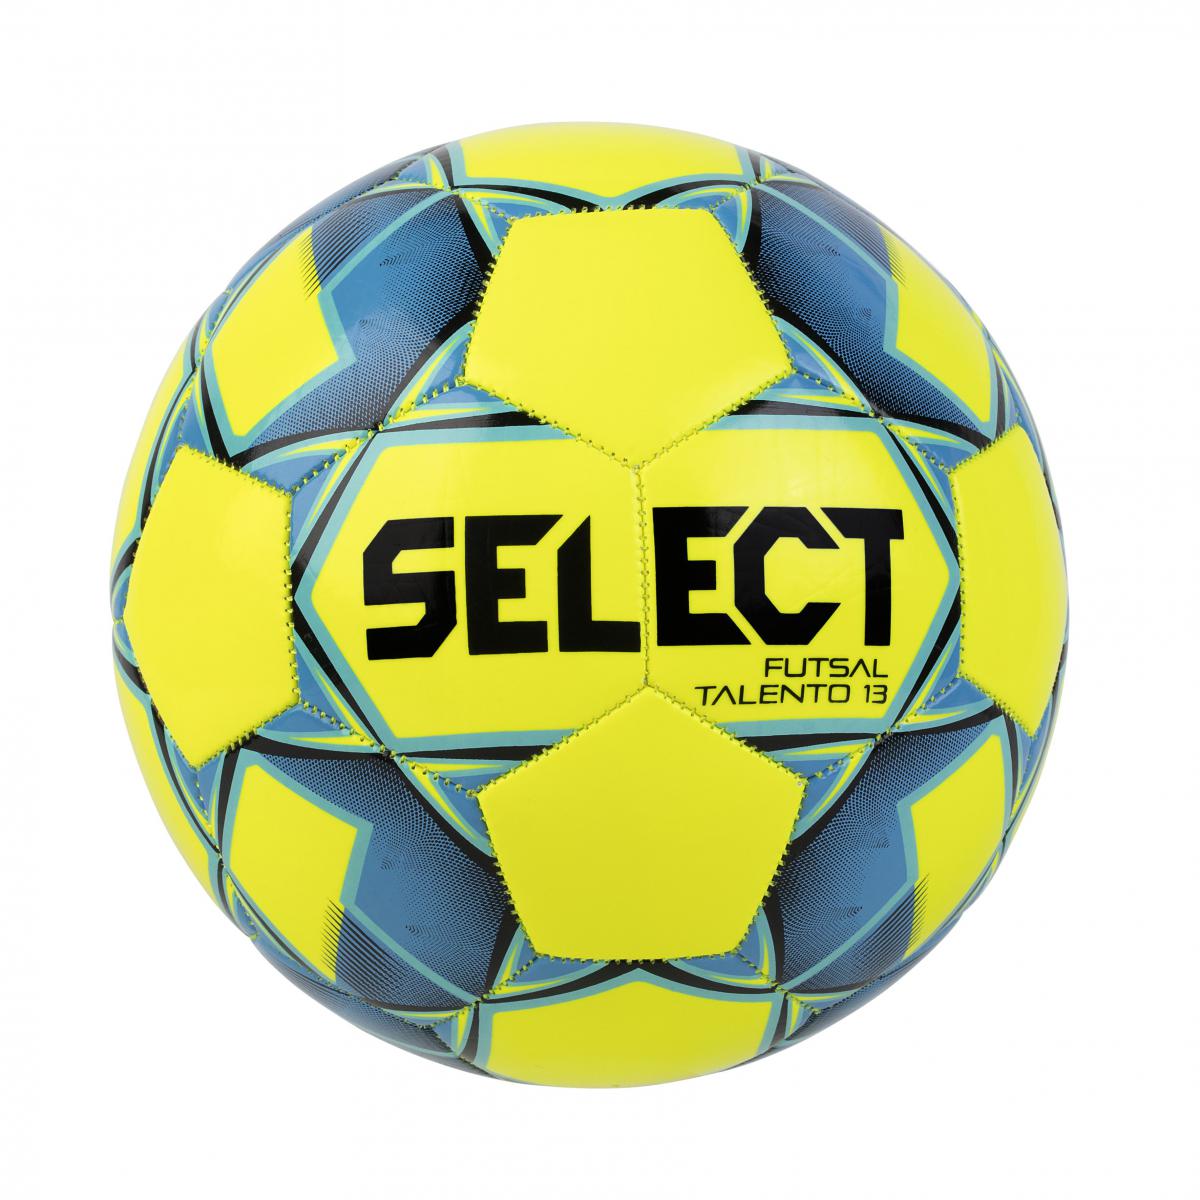 Select Futsal Talento 13 Fotball Barn Volt/Blå